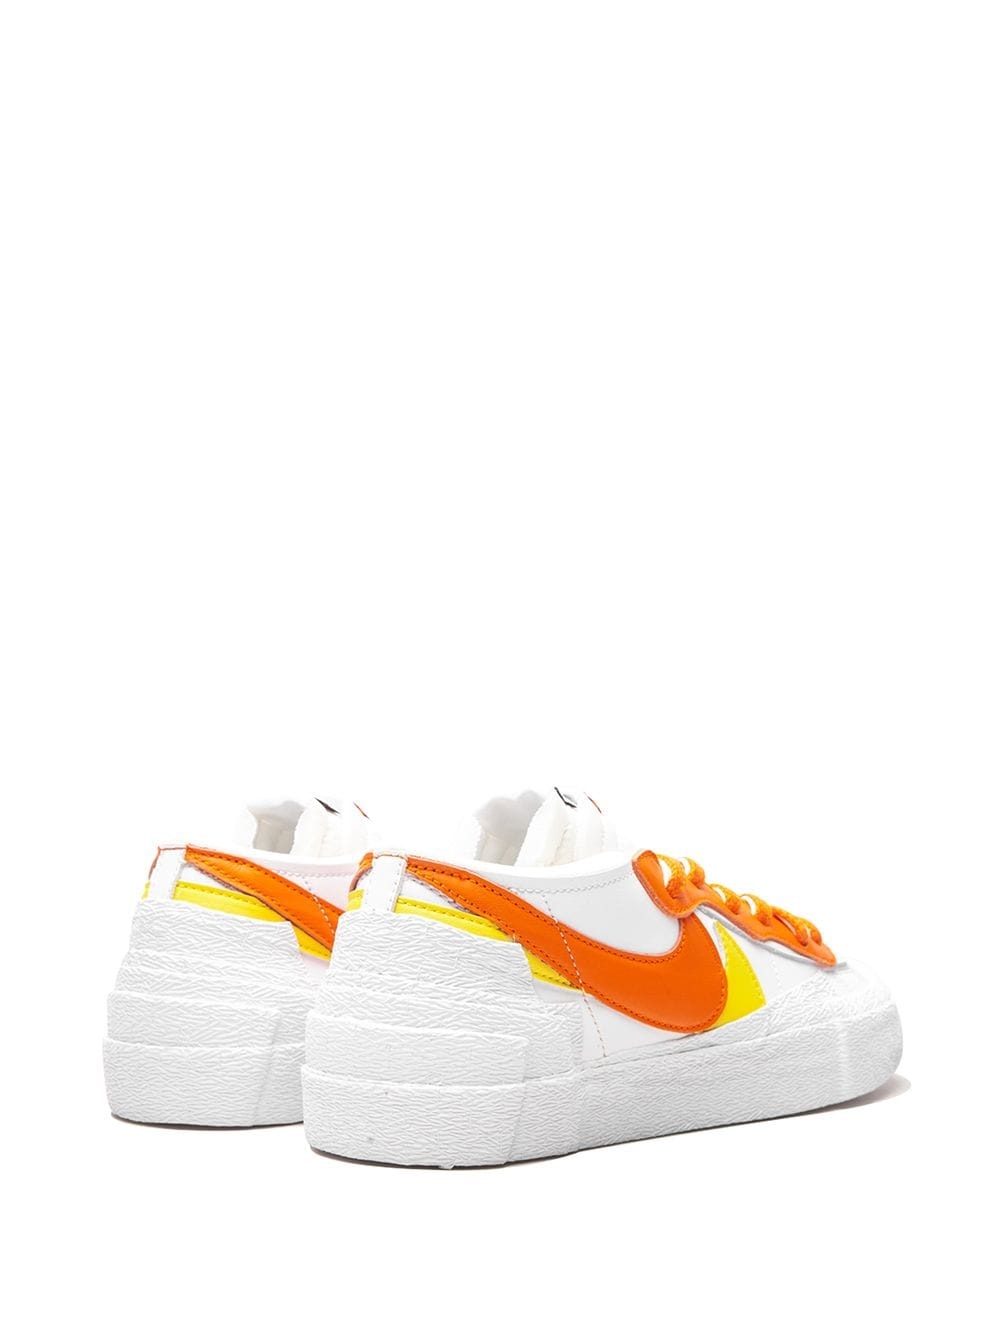 x sacai Blazer Low "Magma Orange" sneakers - 3